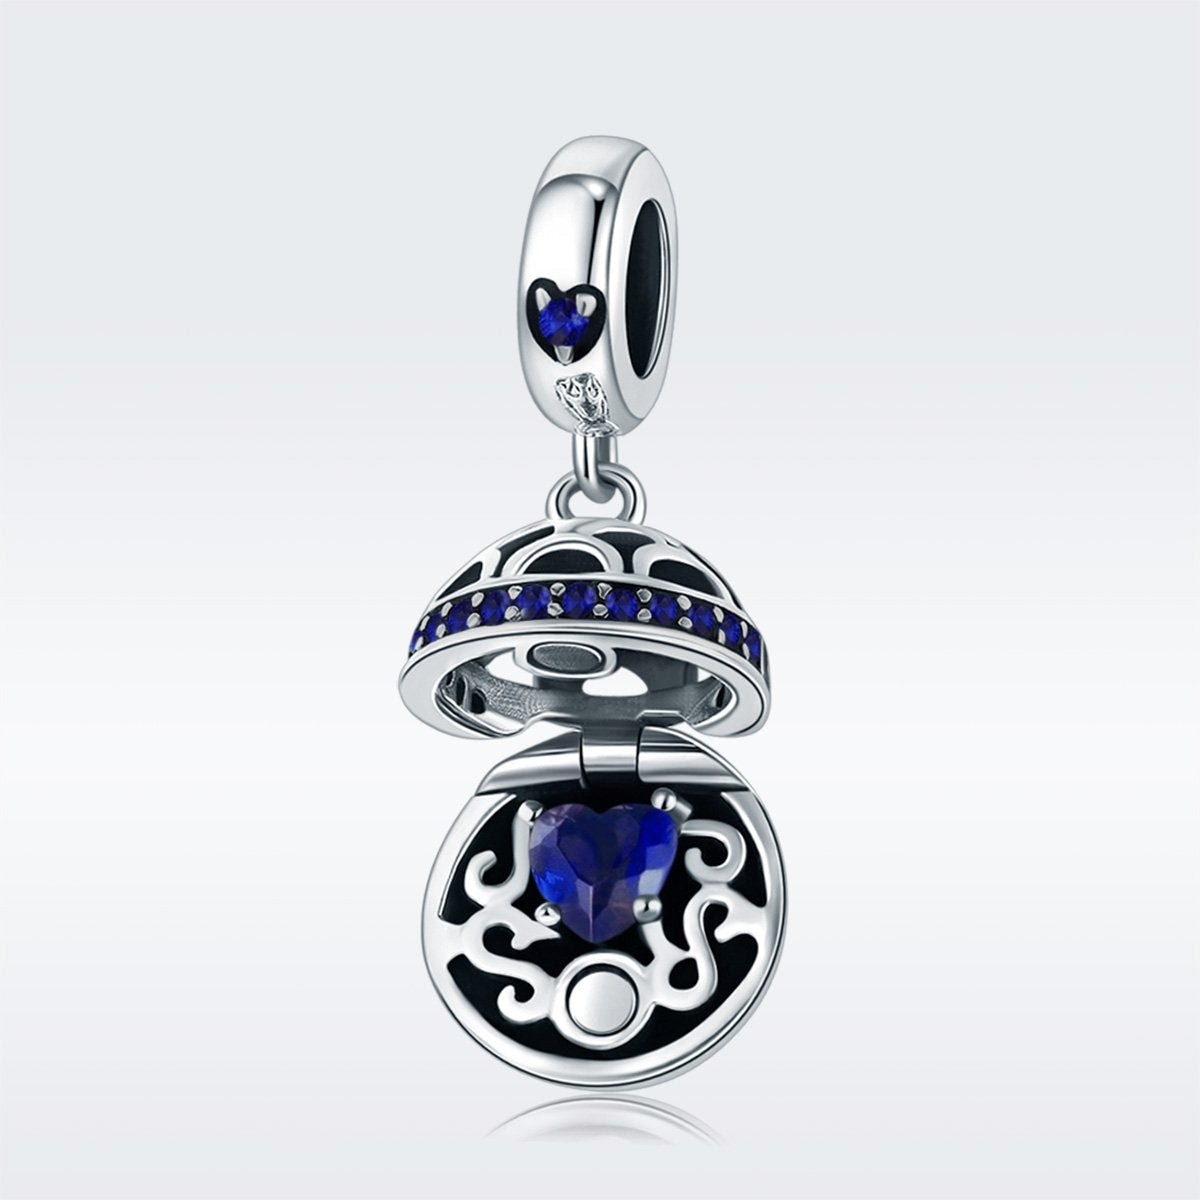 Sterling 925 silver charm the hollow round box blue pendant fits Pandora charm and European charm bracelet Xaxe.com